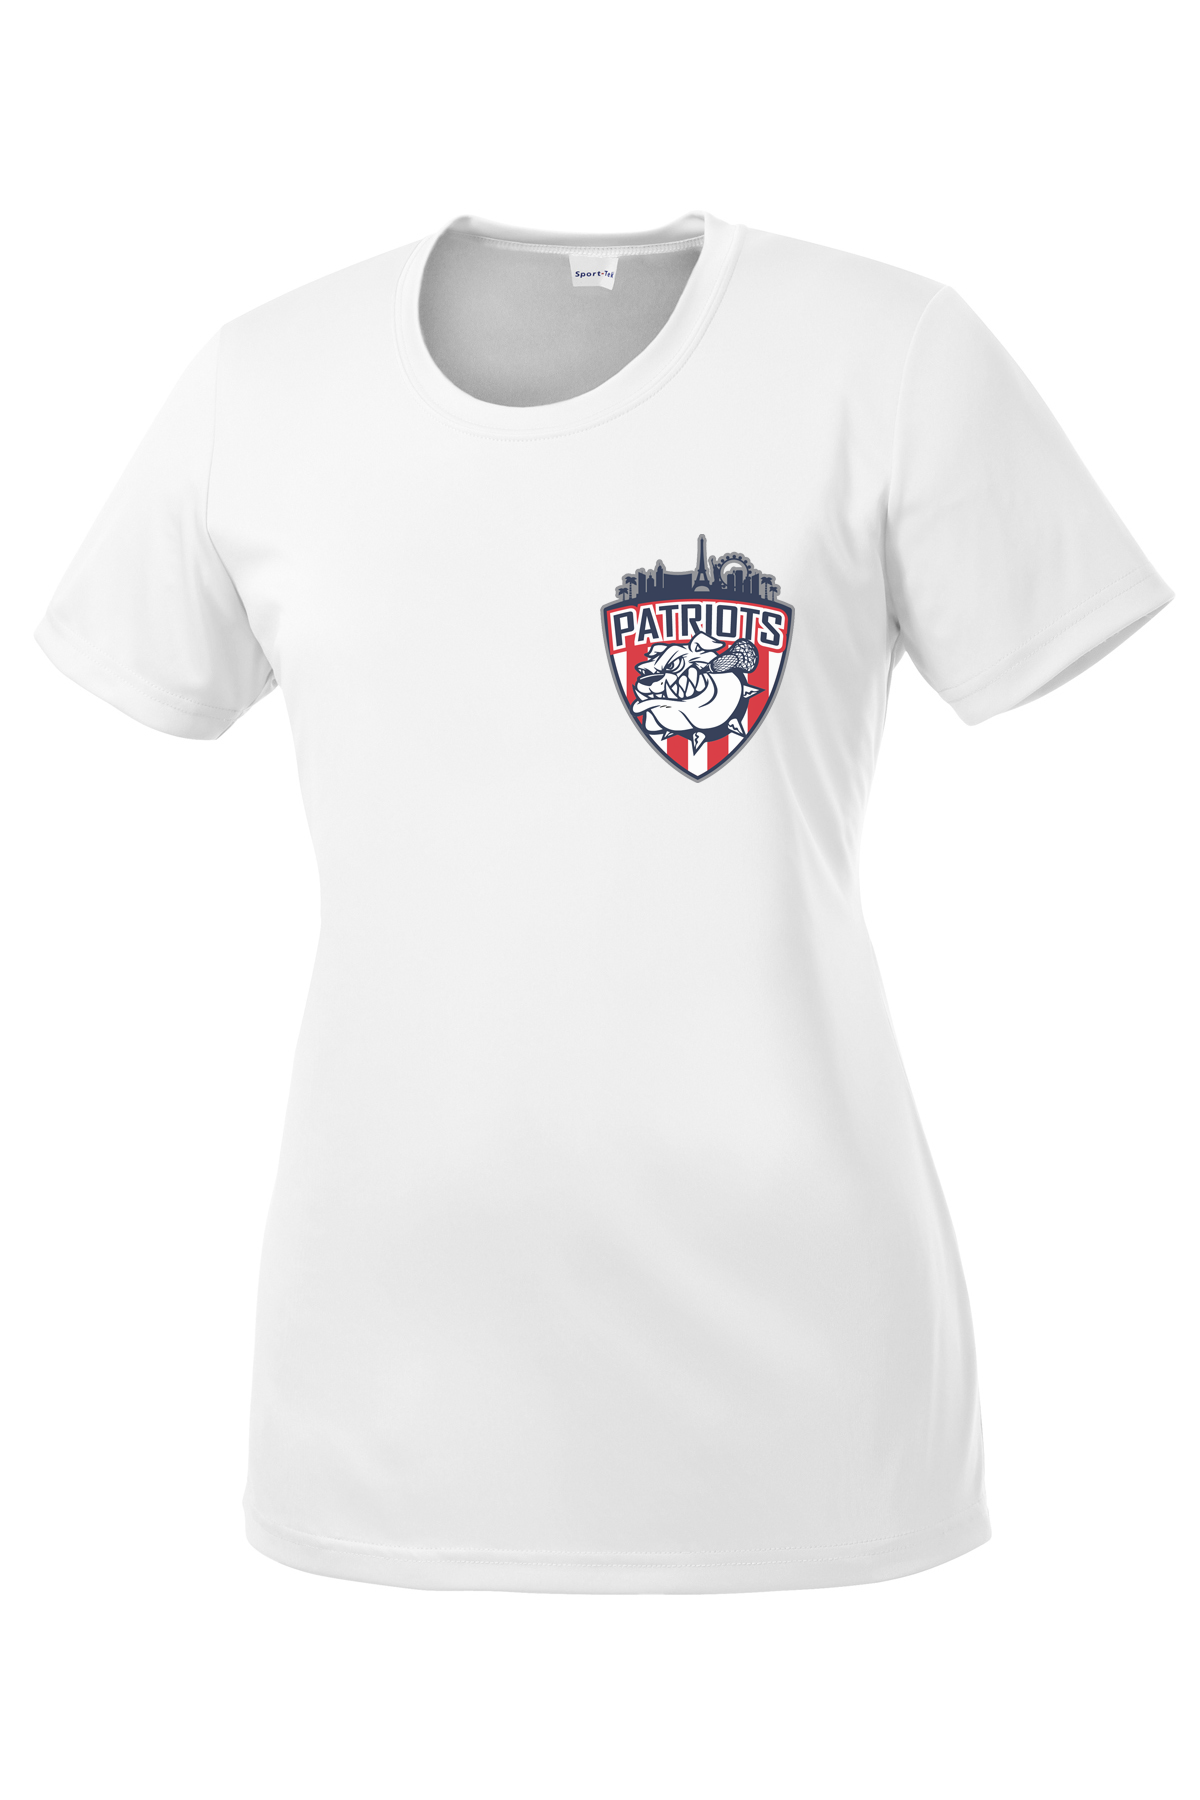 Las Vegas Patriots Women's Performance T-Shirt